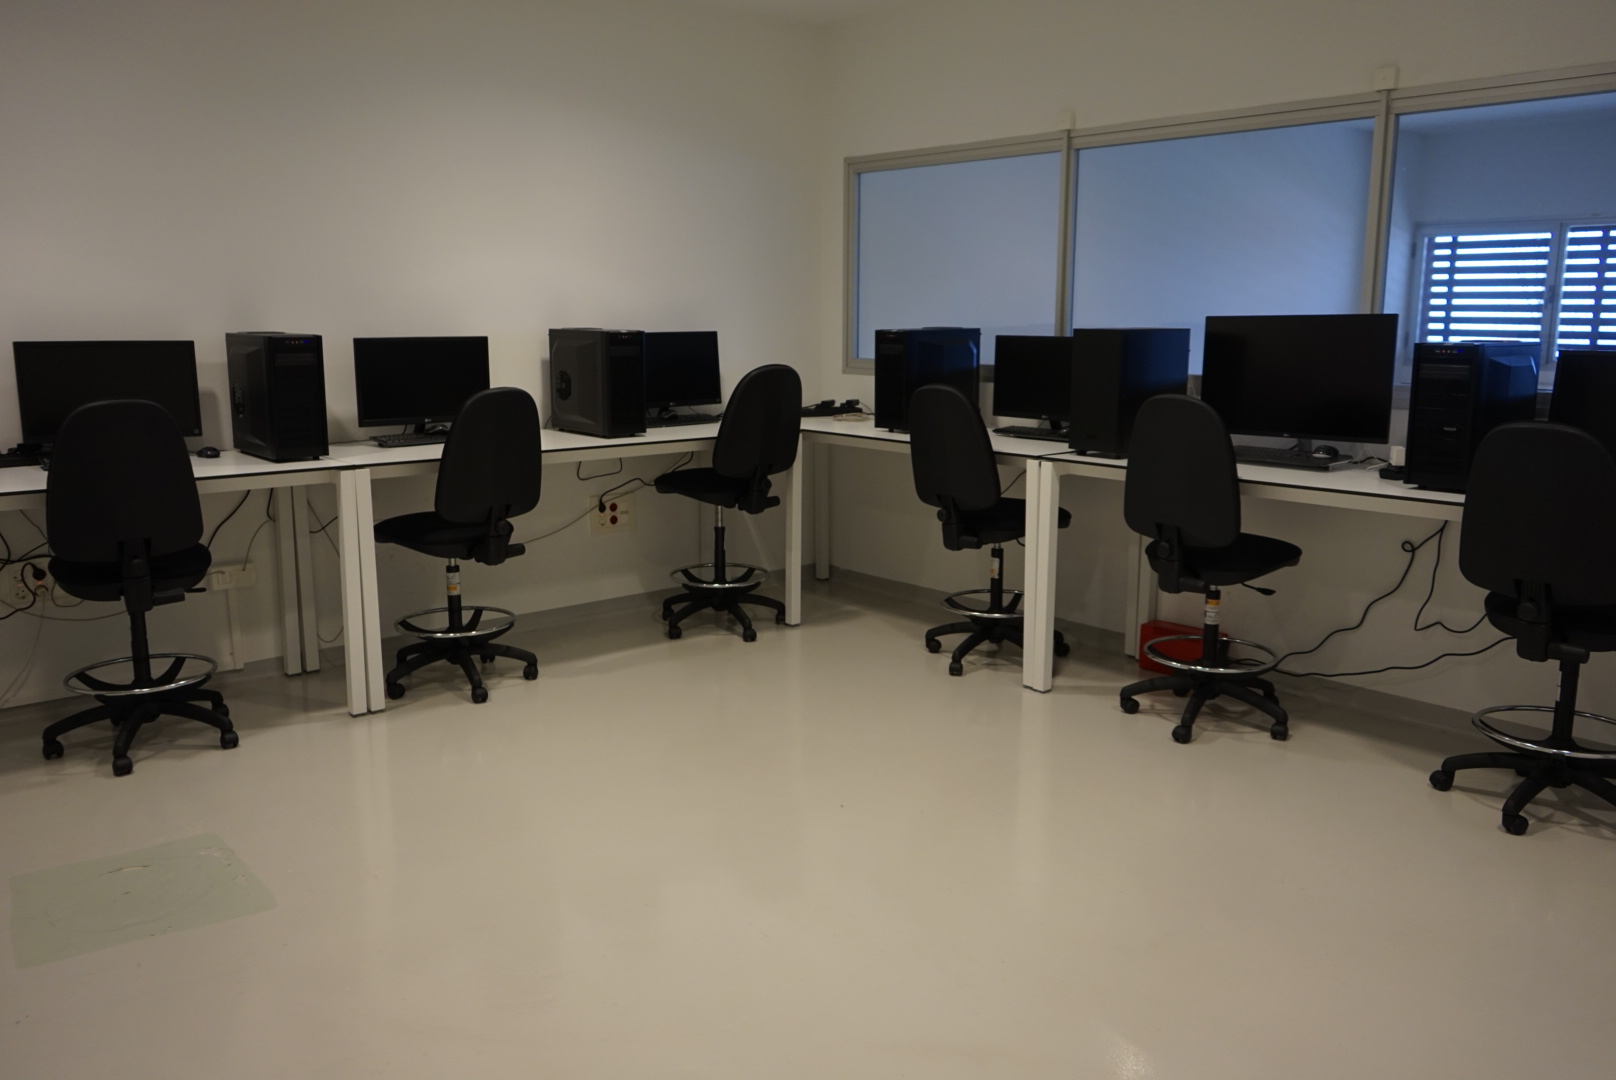 Common computers Laboratory 26